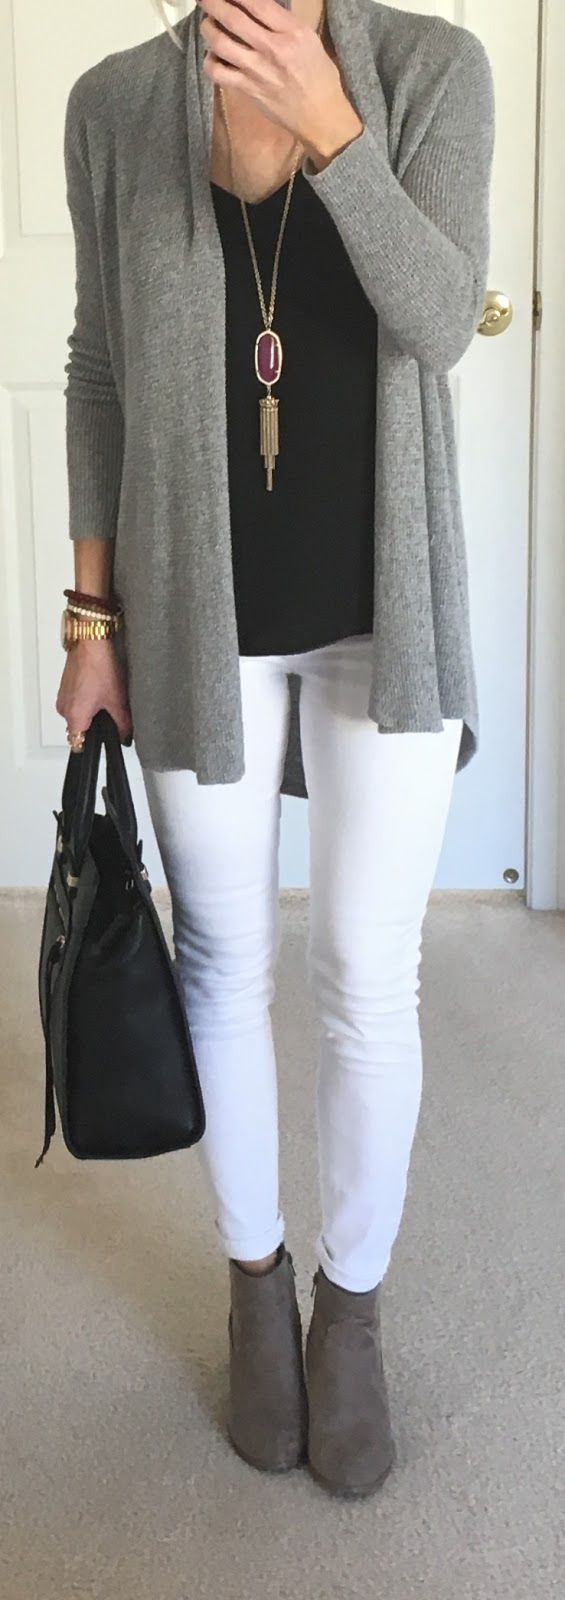 grey cardi + black top + bag + white skinnies + boots